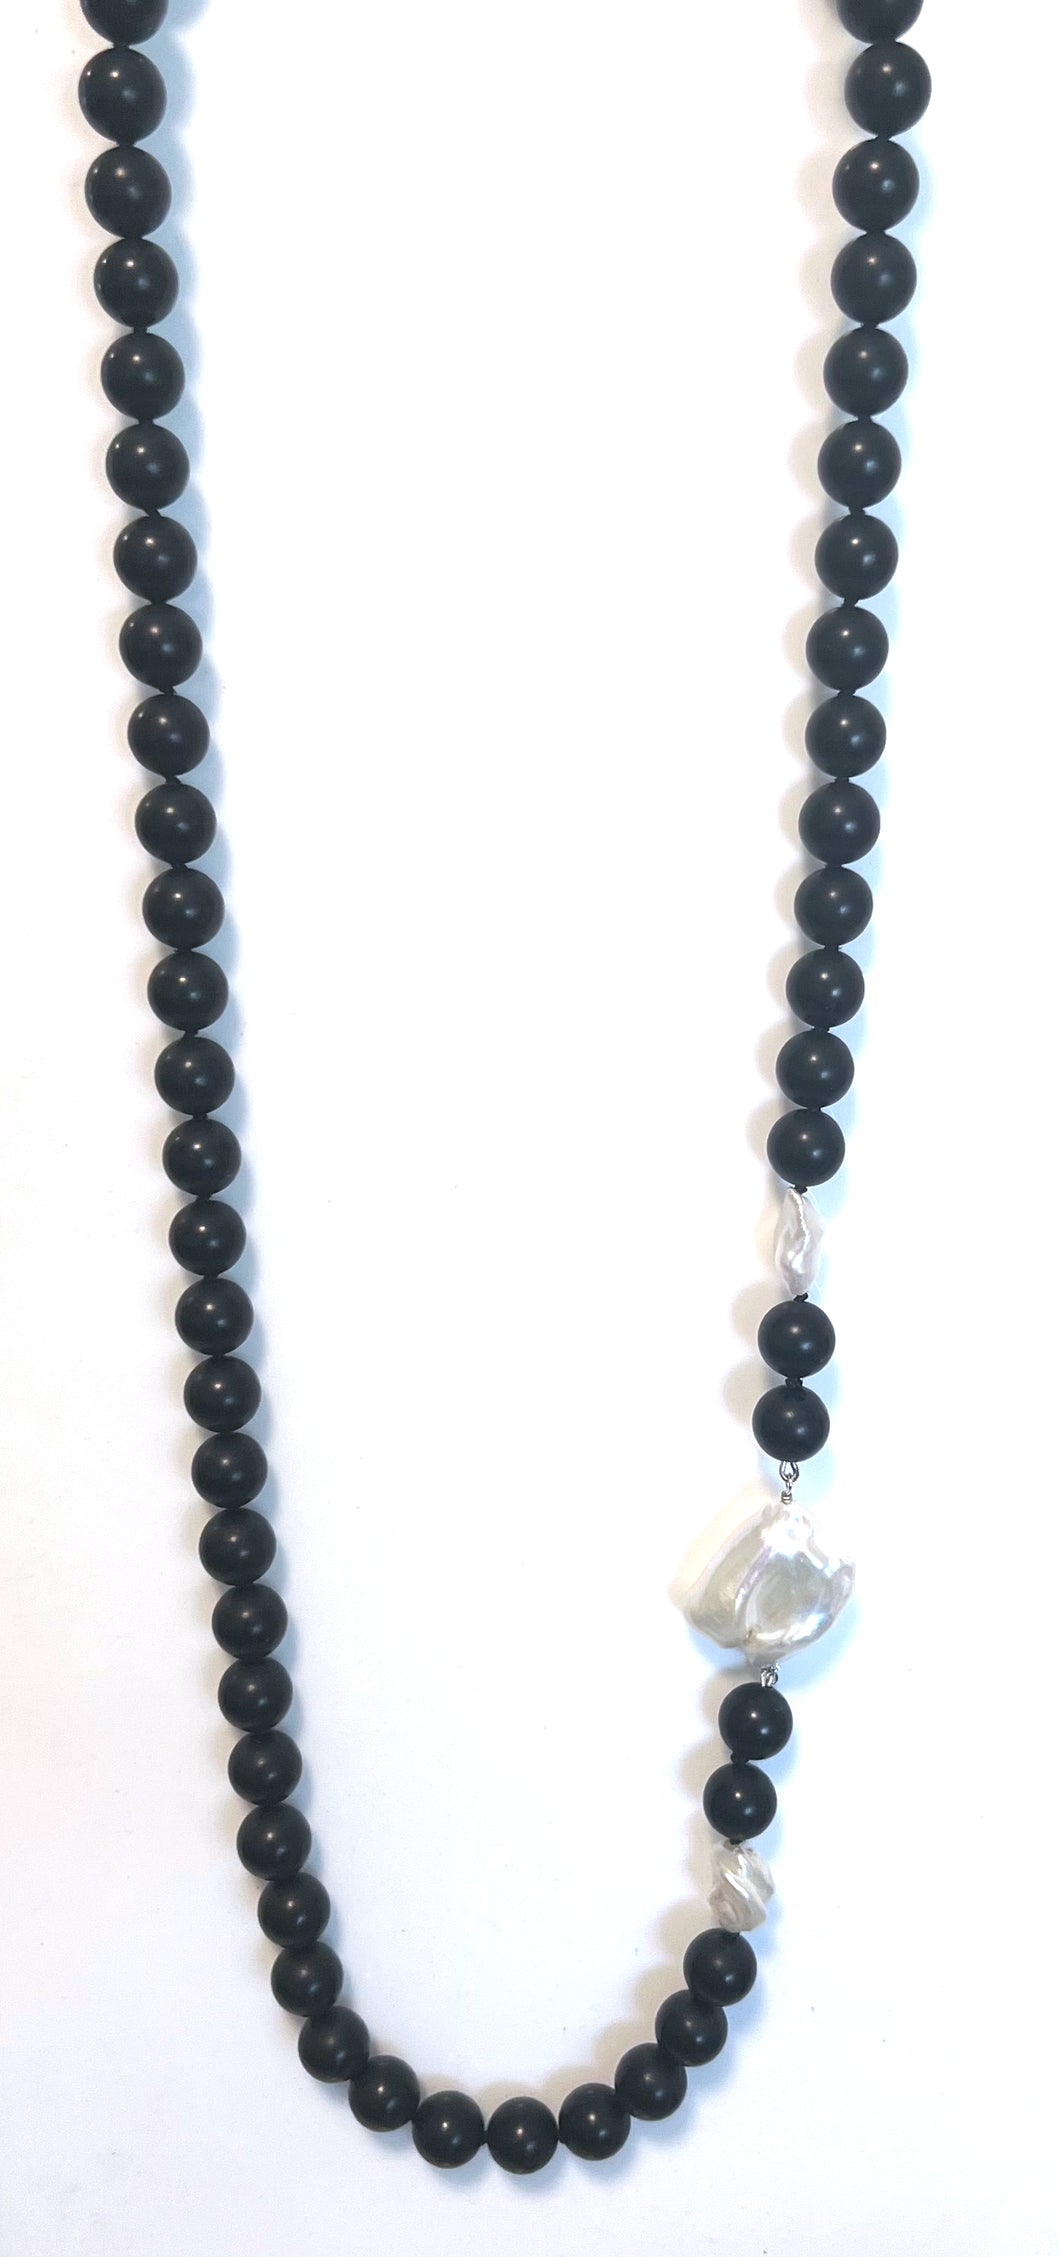 Australian Handmade Black Necklace with Matt Black Jade Baroque Pearl and Keshi Pearls